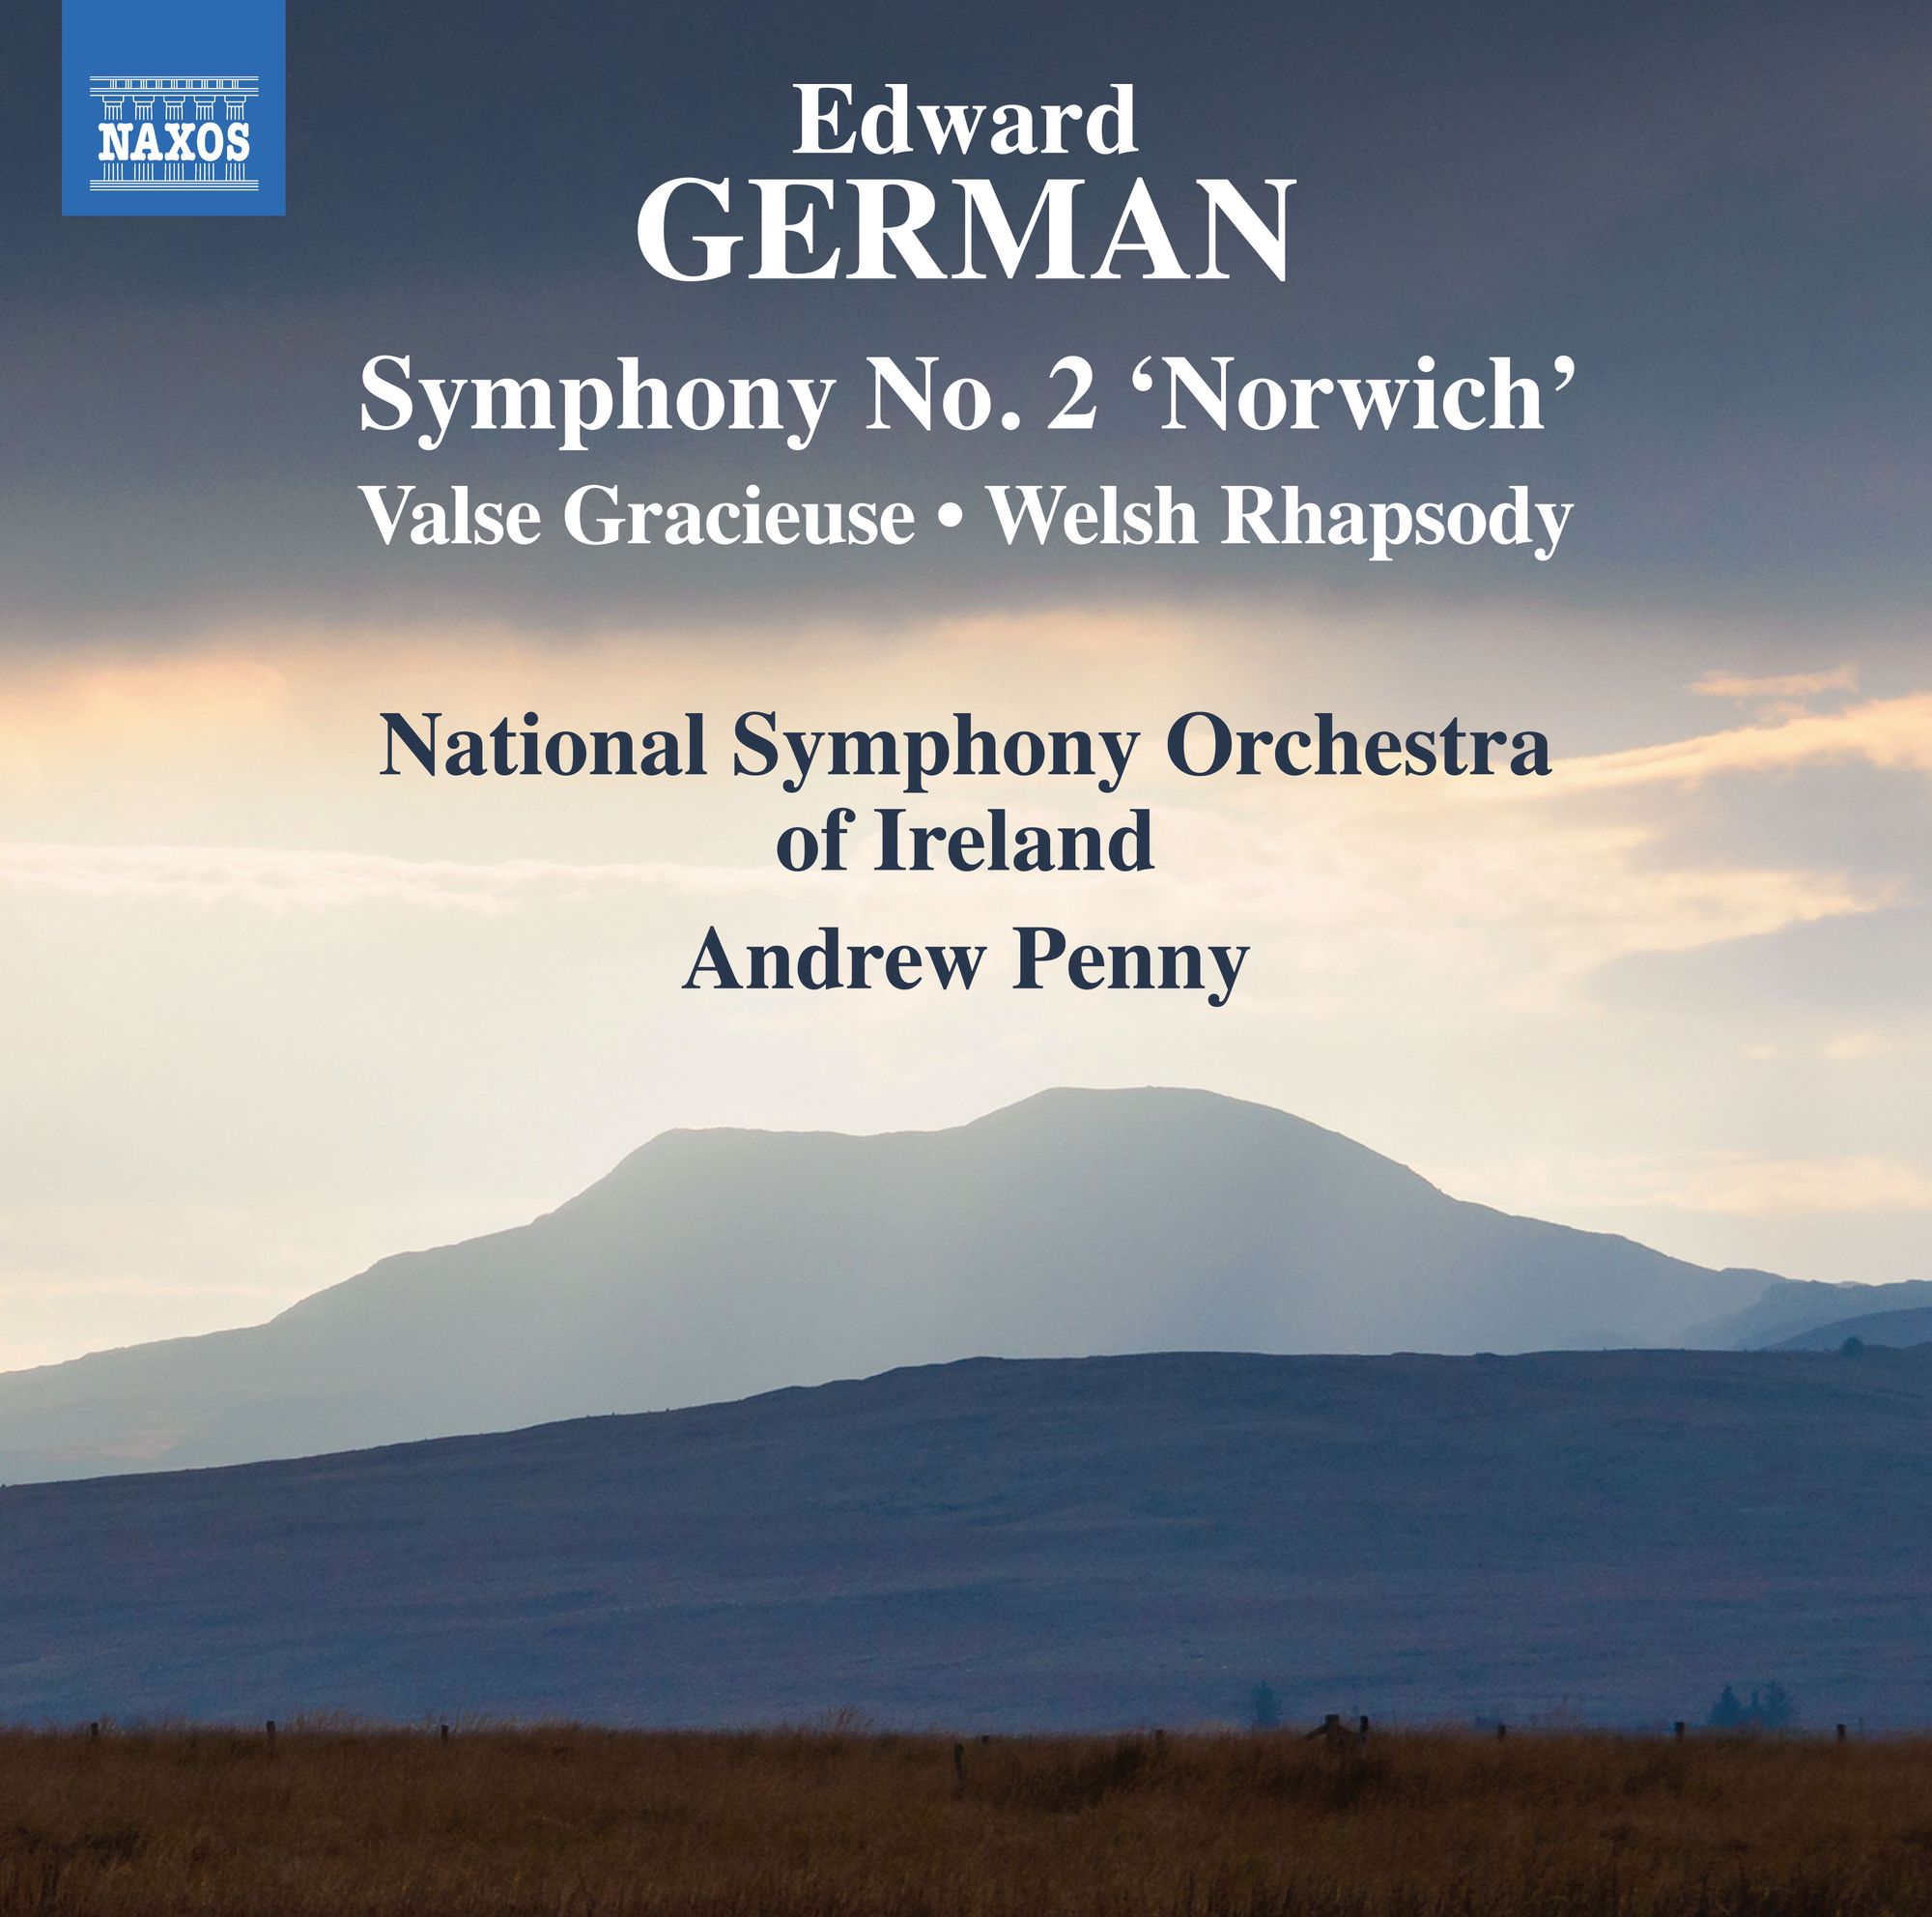 REPOST: Edward German's ‘Norwich’ Symphony